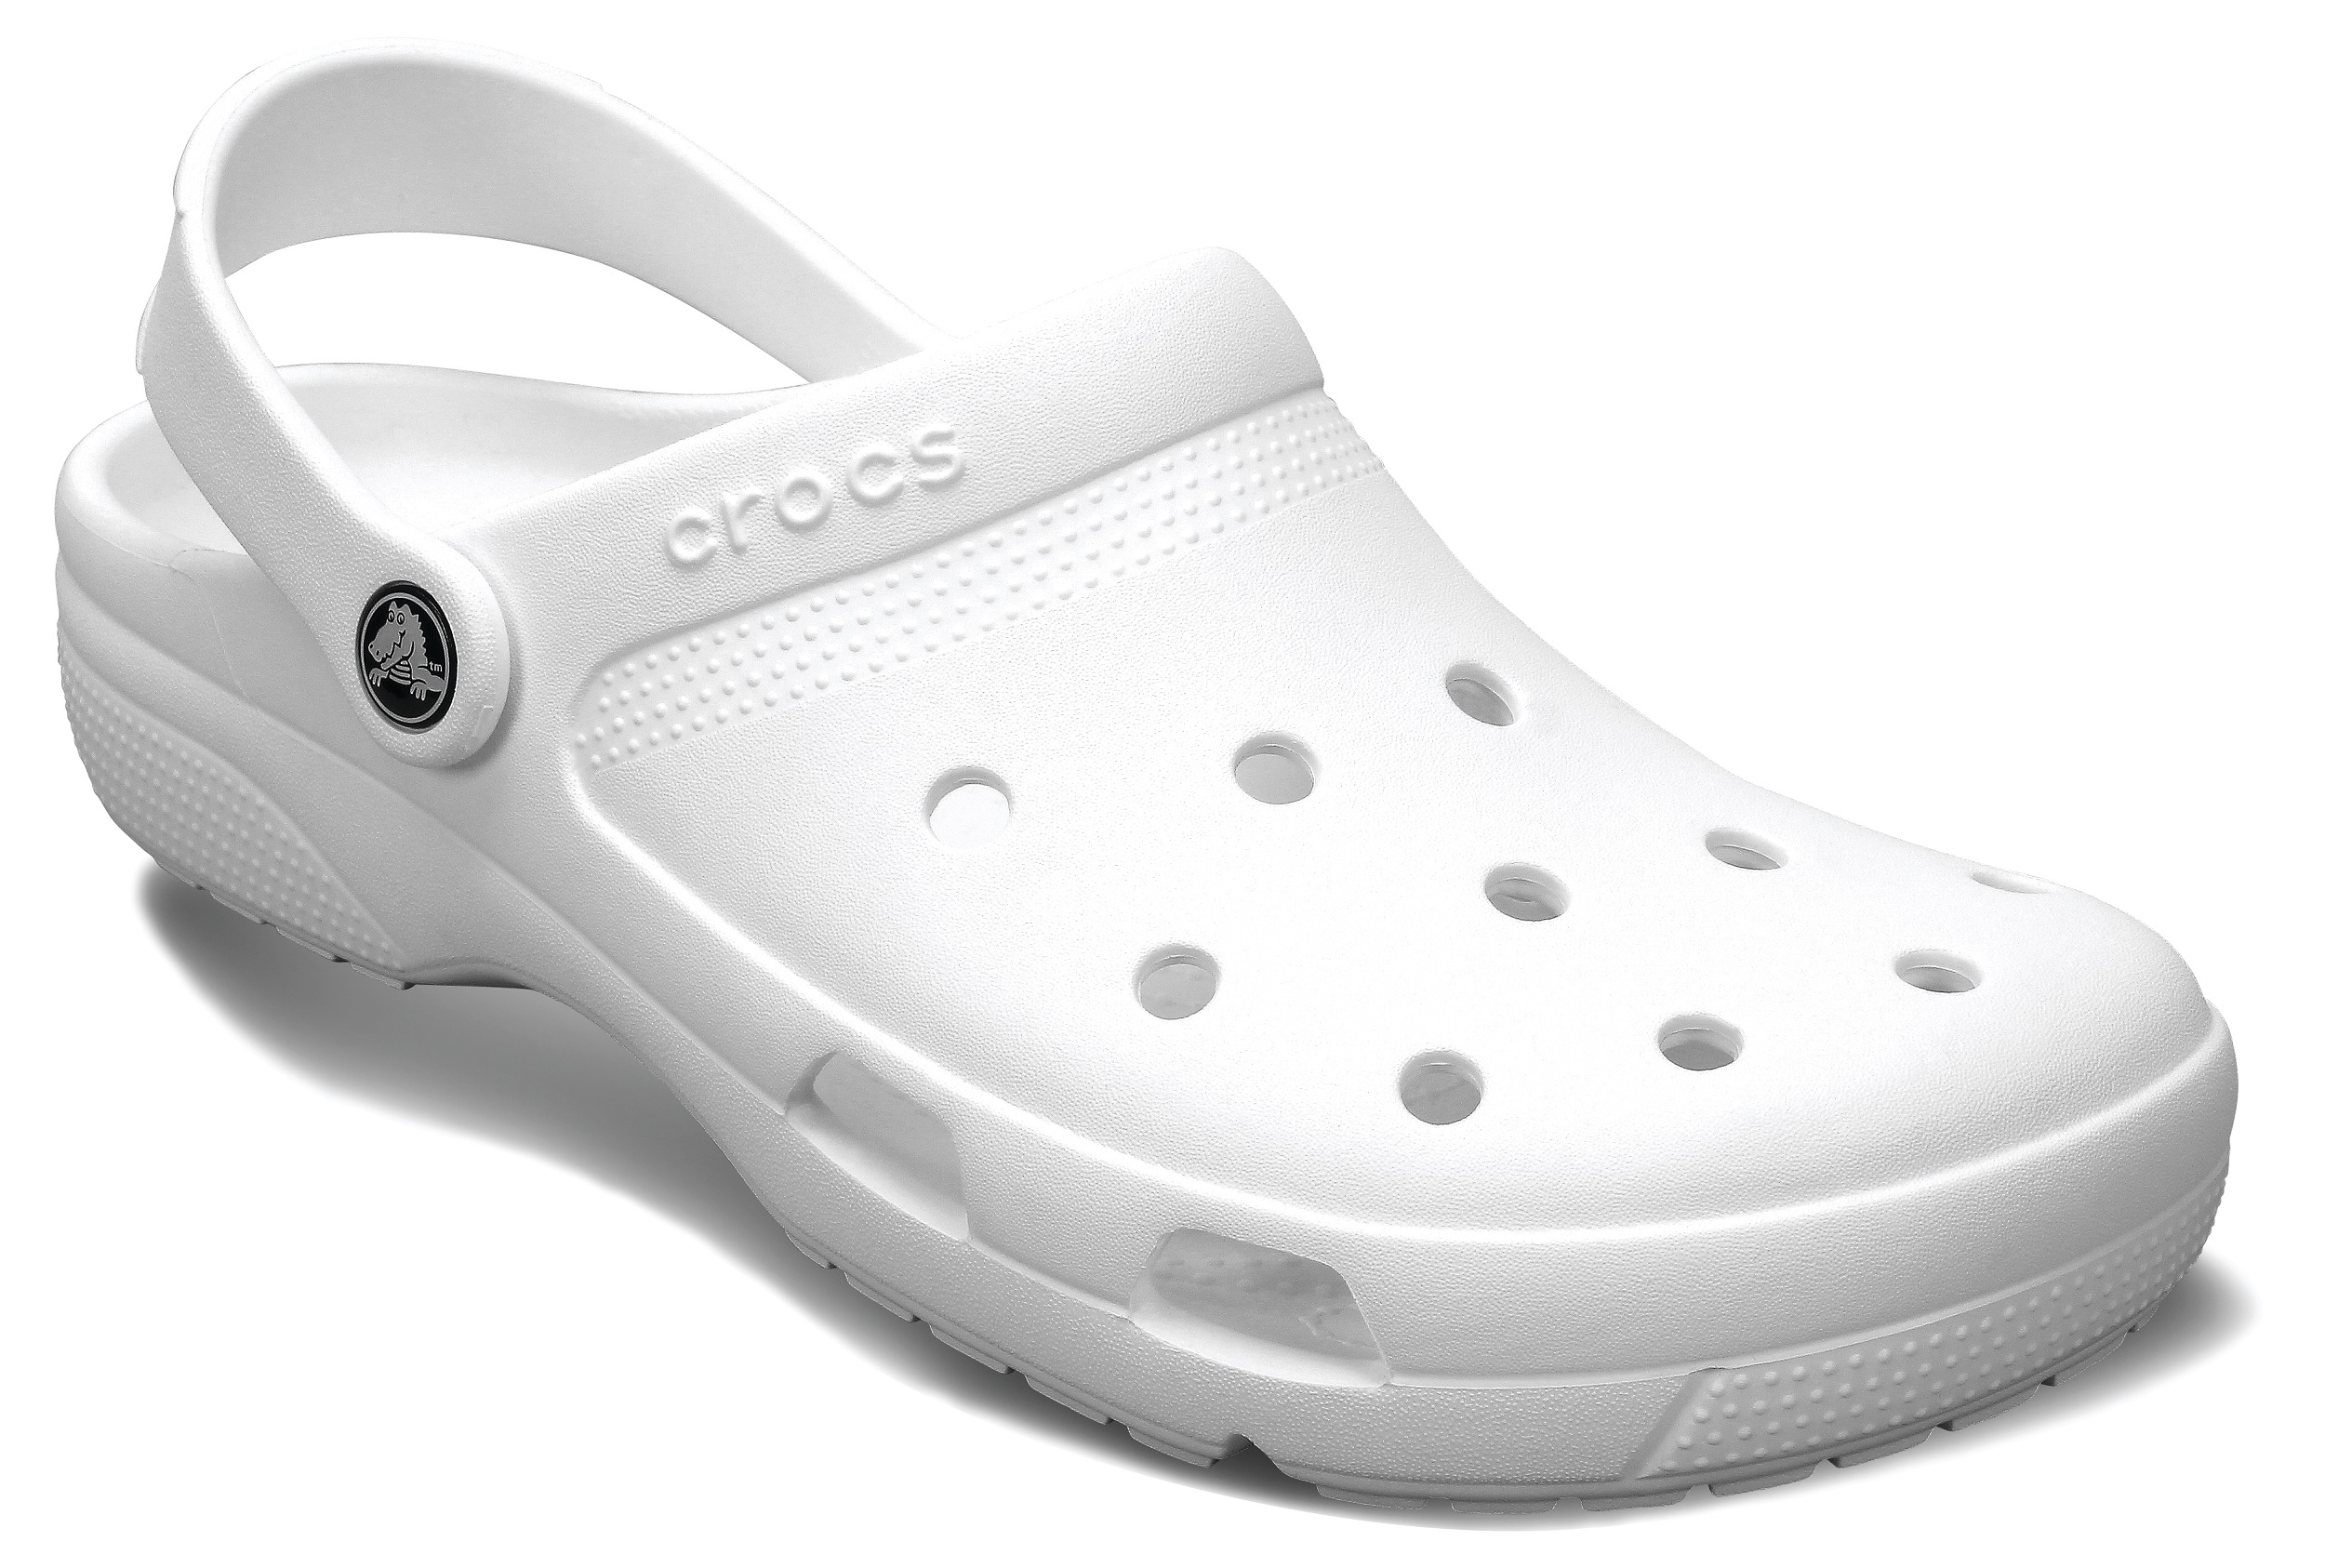 Buy Crocs Men White Clog Online @ ₹1995 from ShopClues